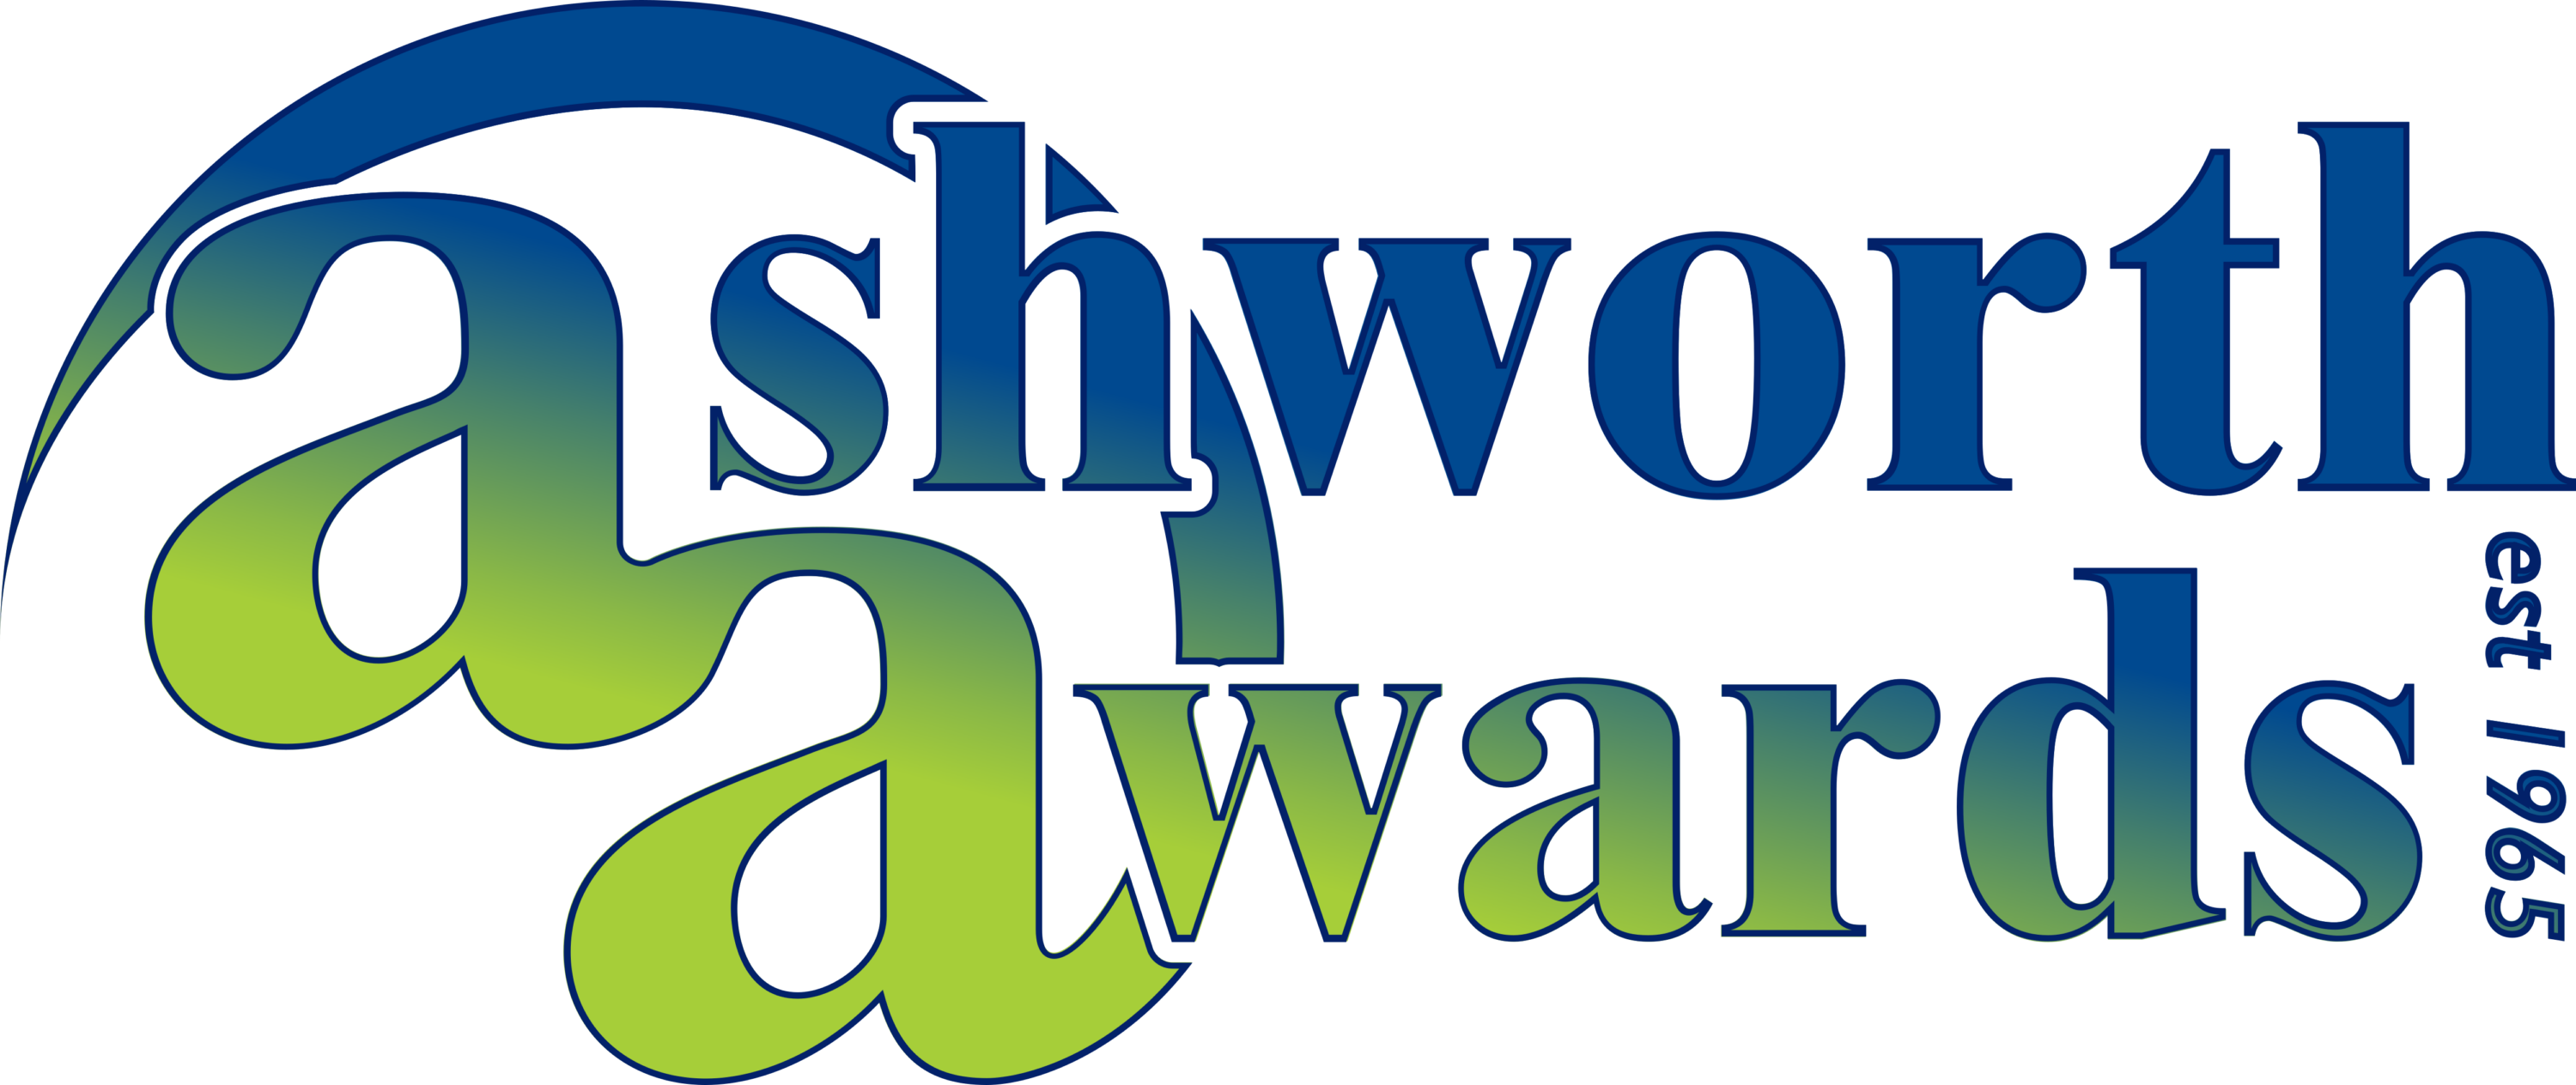 Ashworth Awards Logo